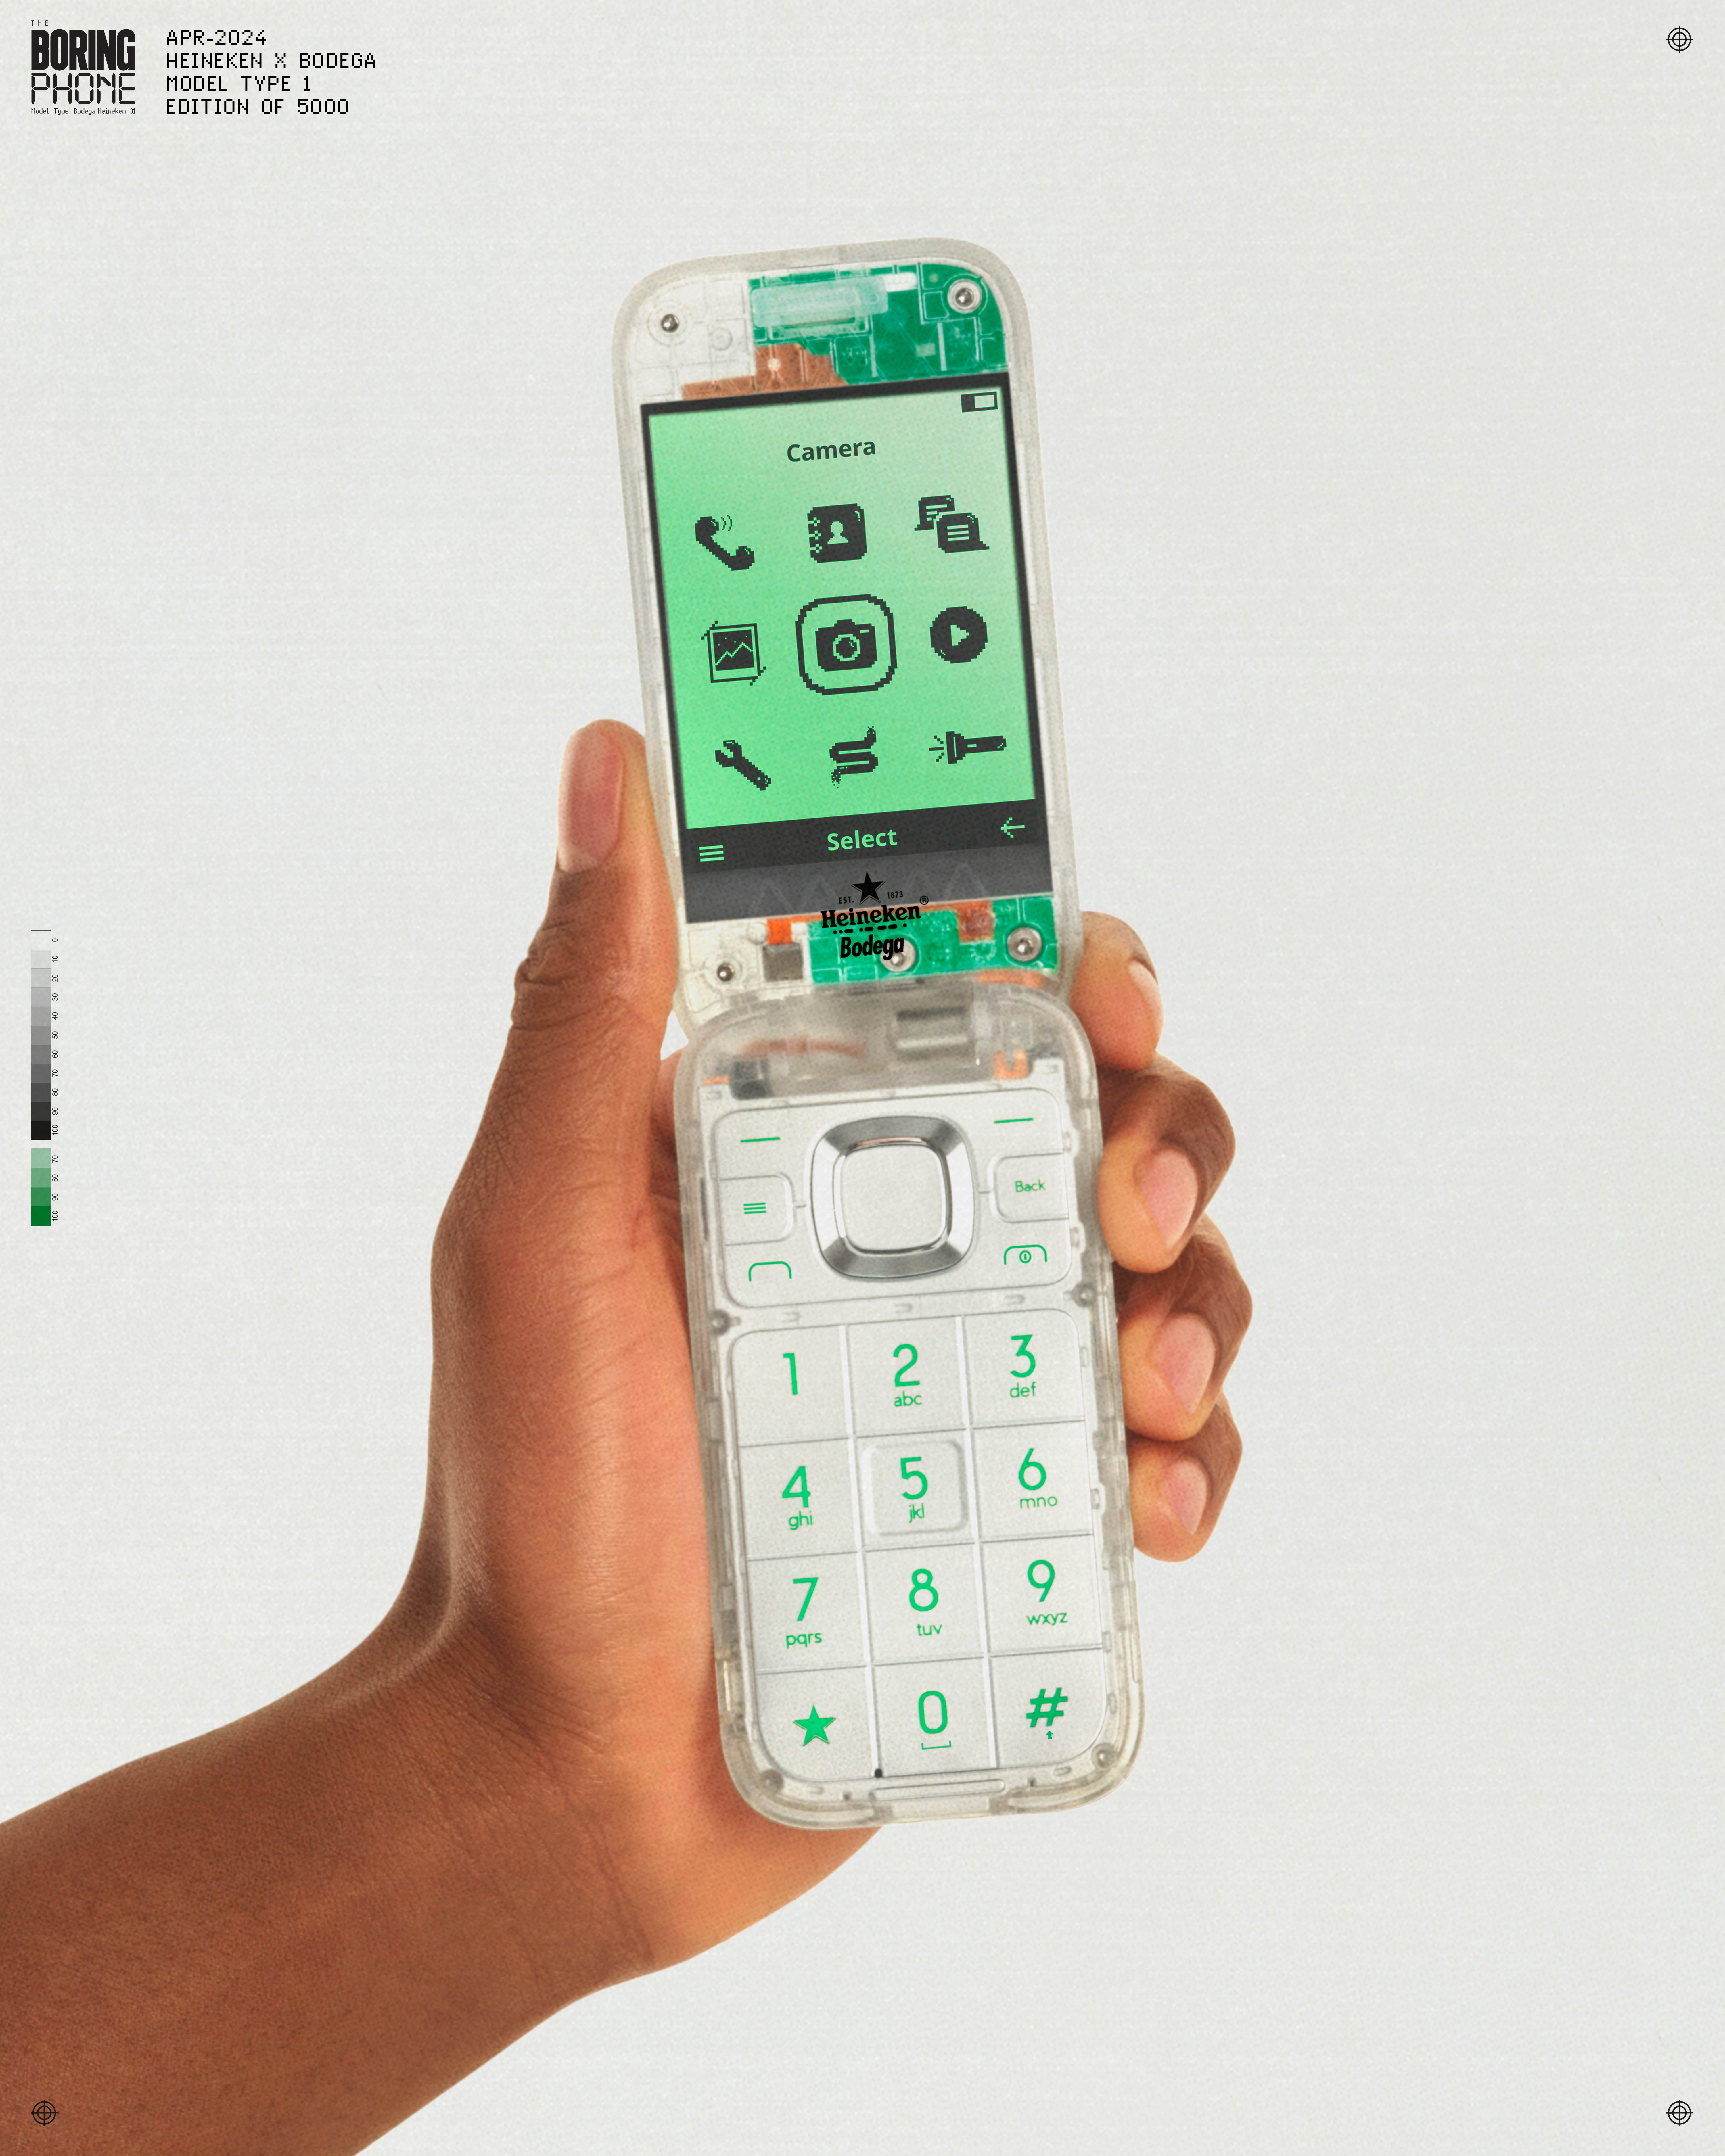 Heineken® & Bodega launch. The no-frills ‘Boring Phone’